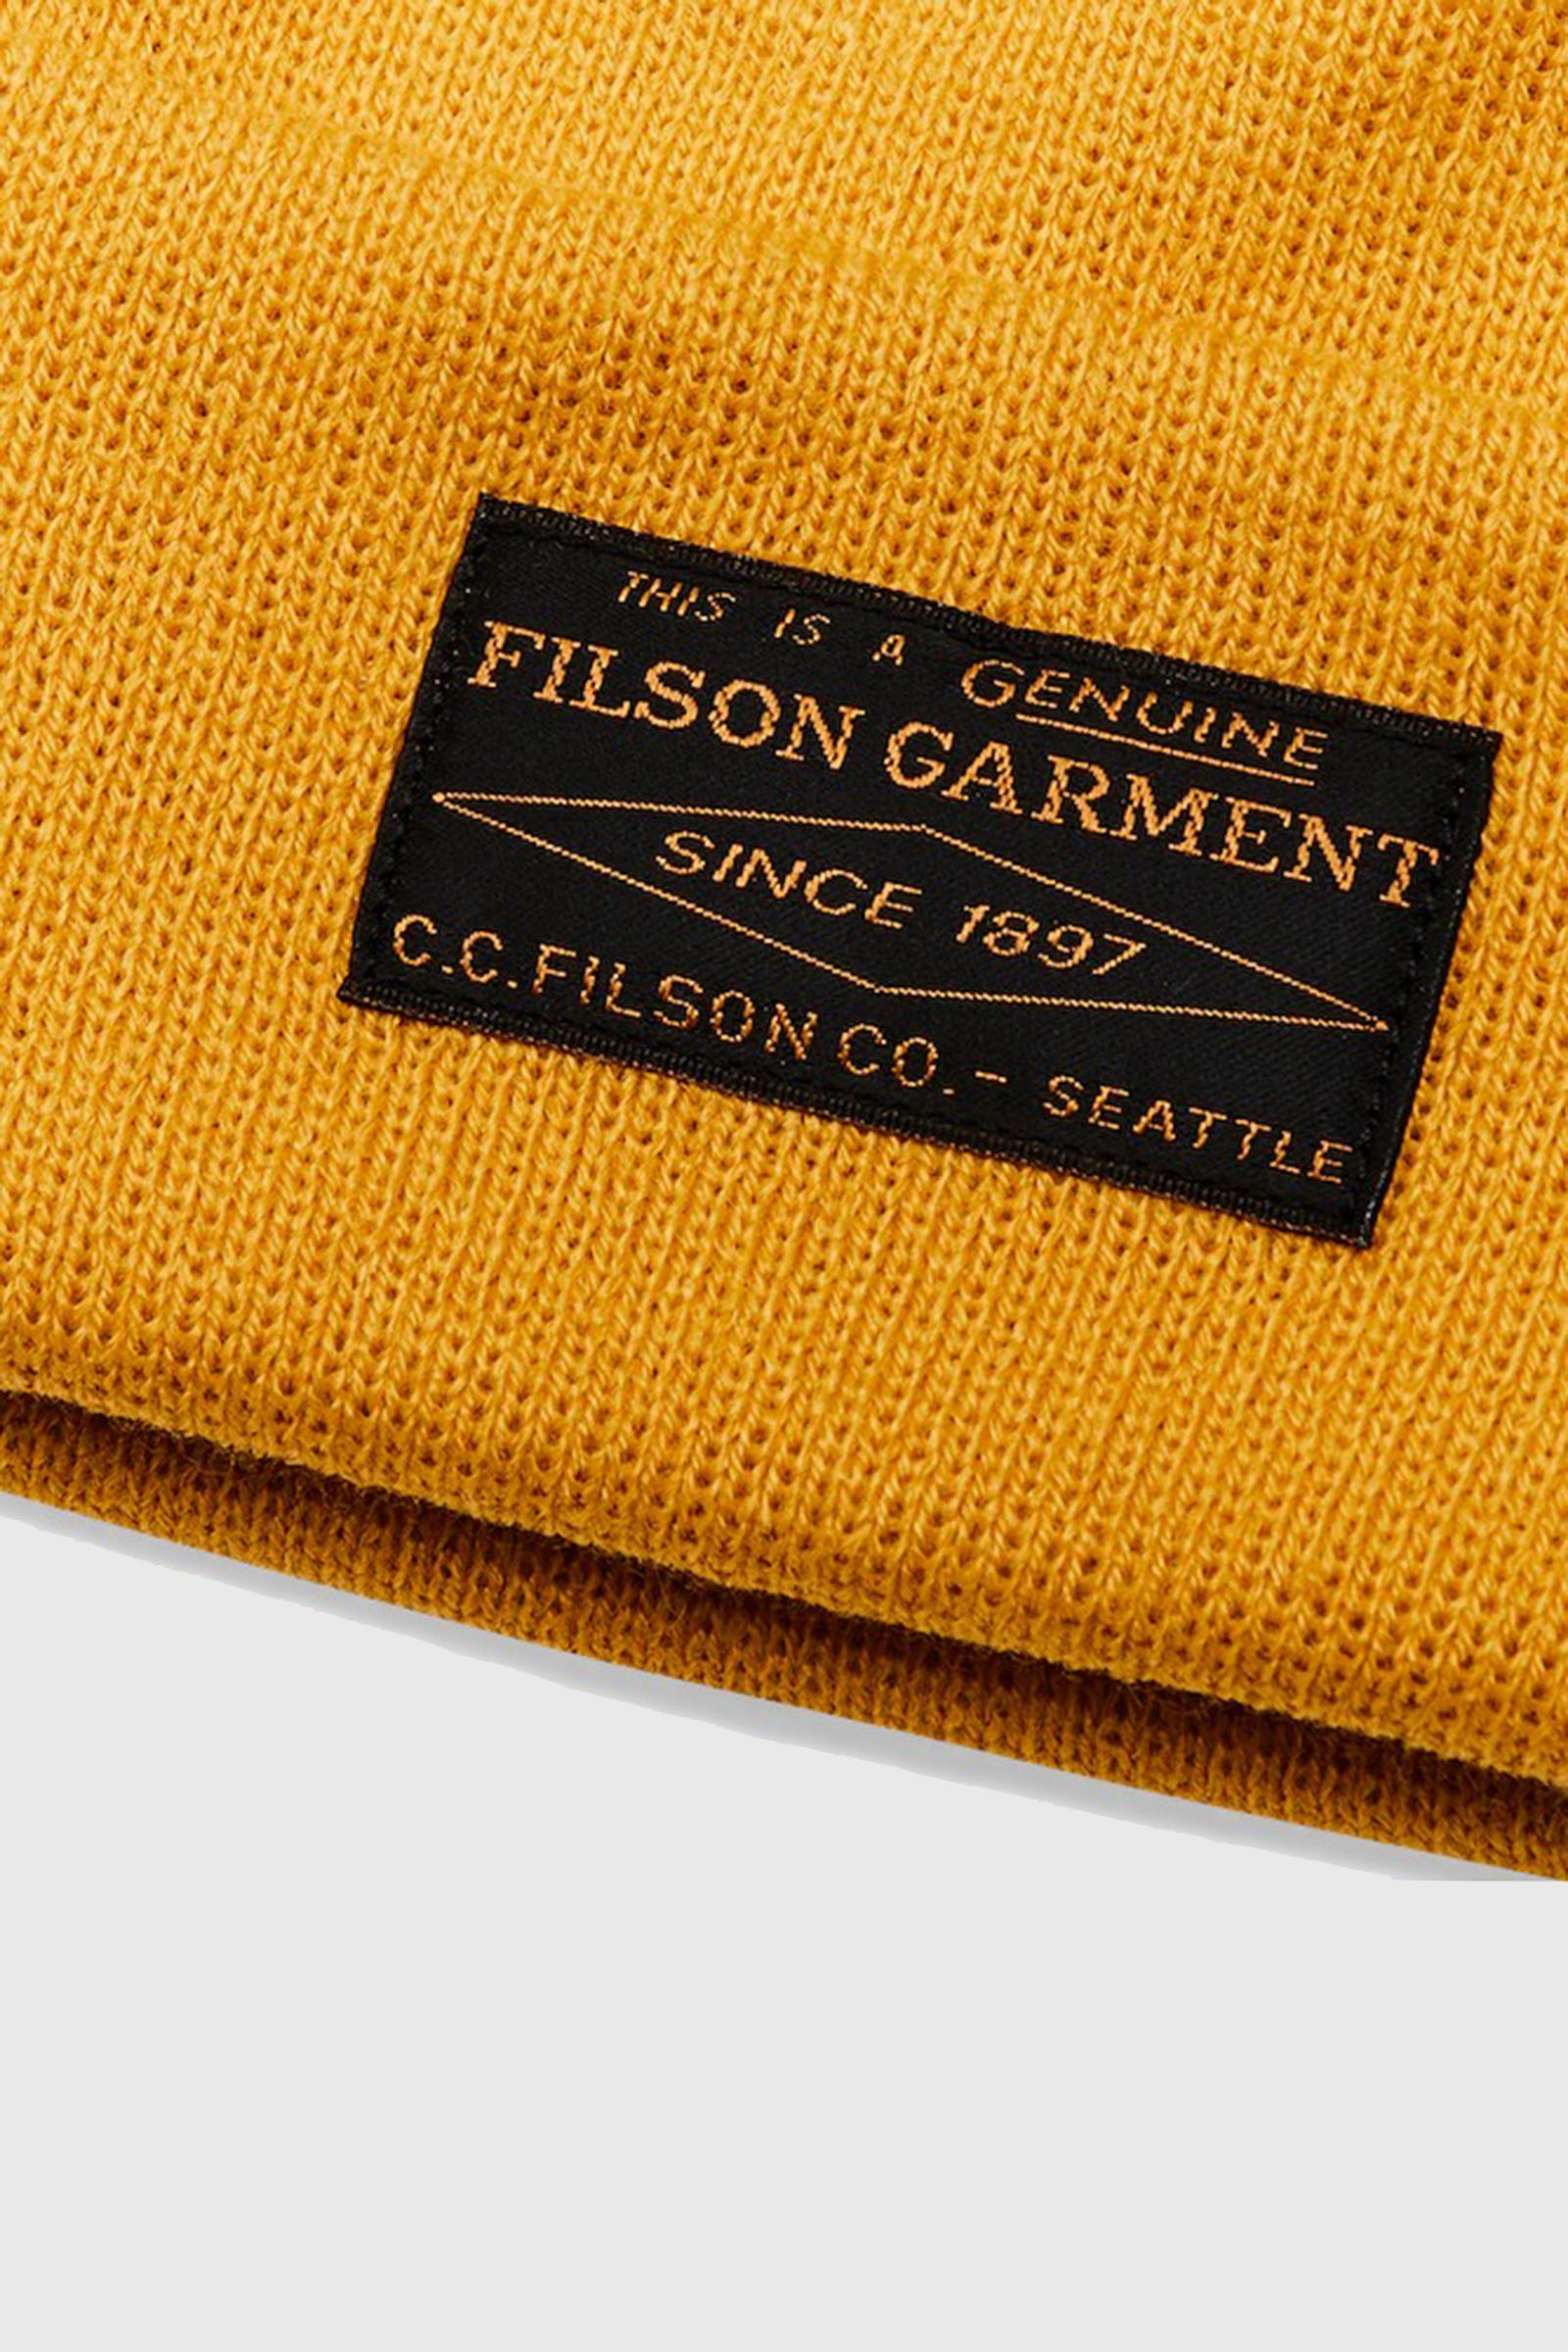 Filson Ballard Watch Cap Yellow Synthetic - 2